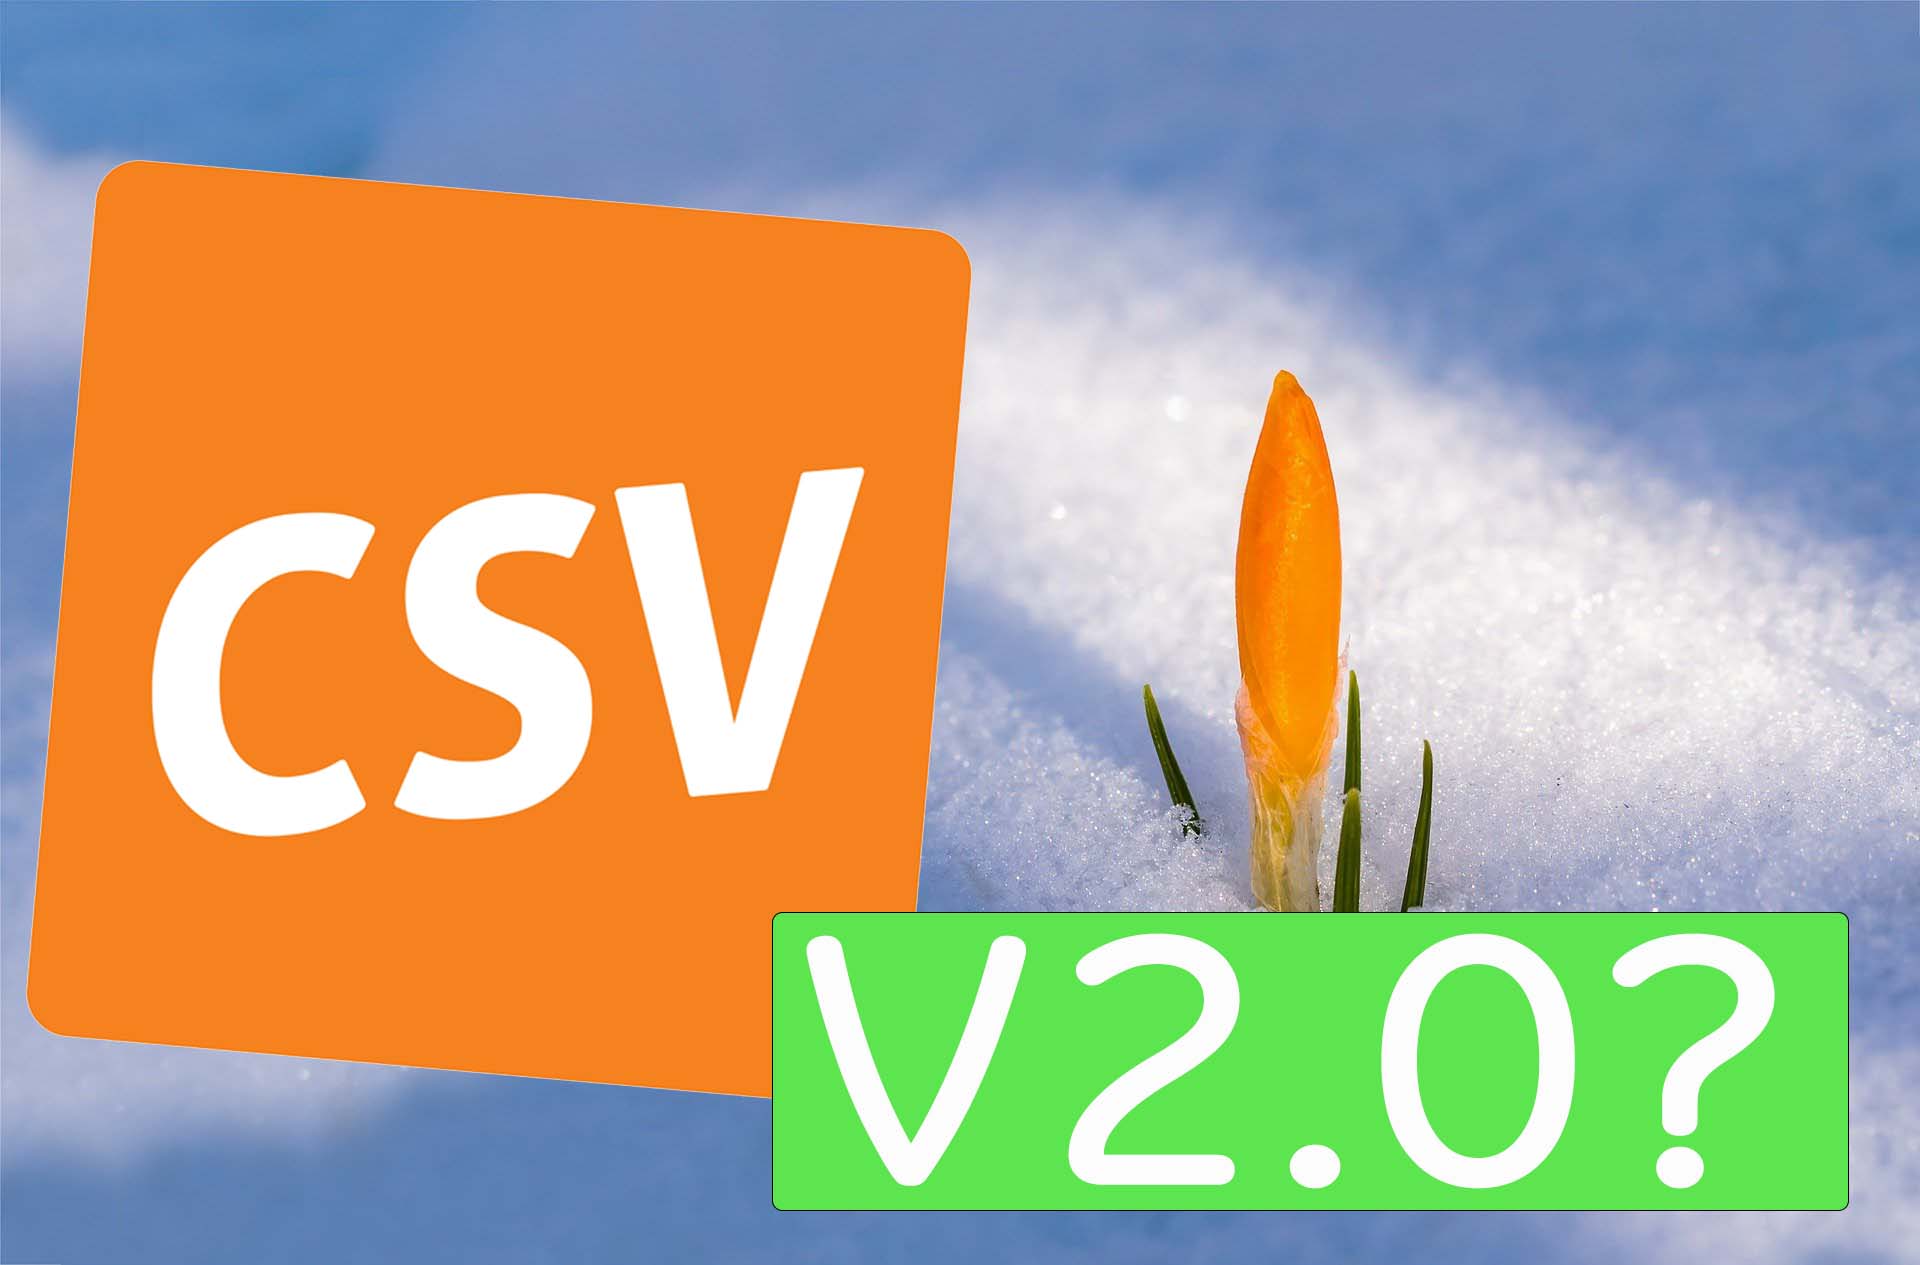 CSV 2.0 – Ready to share a dream?